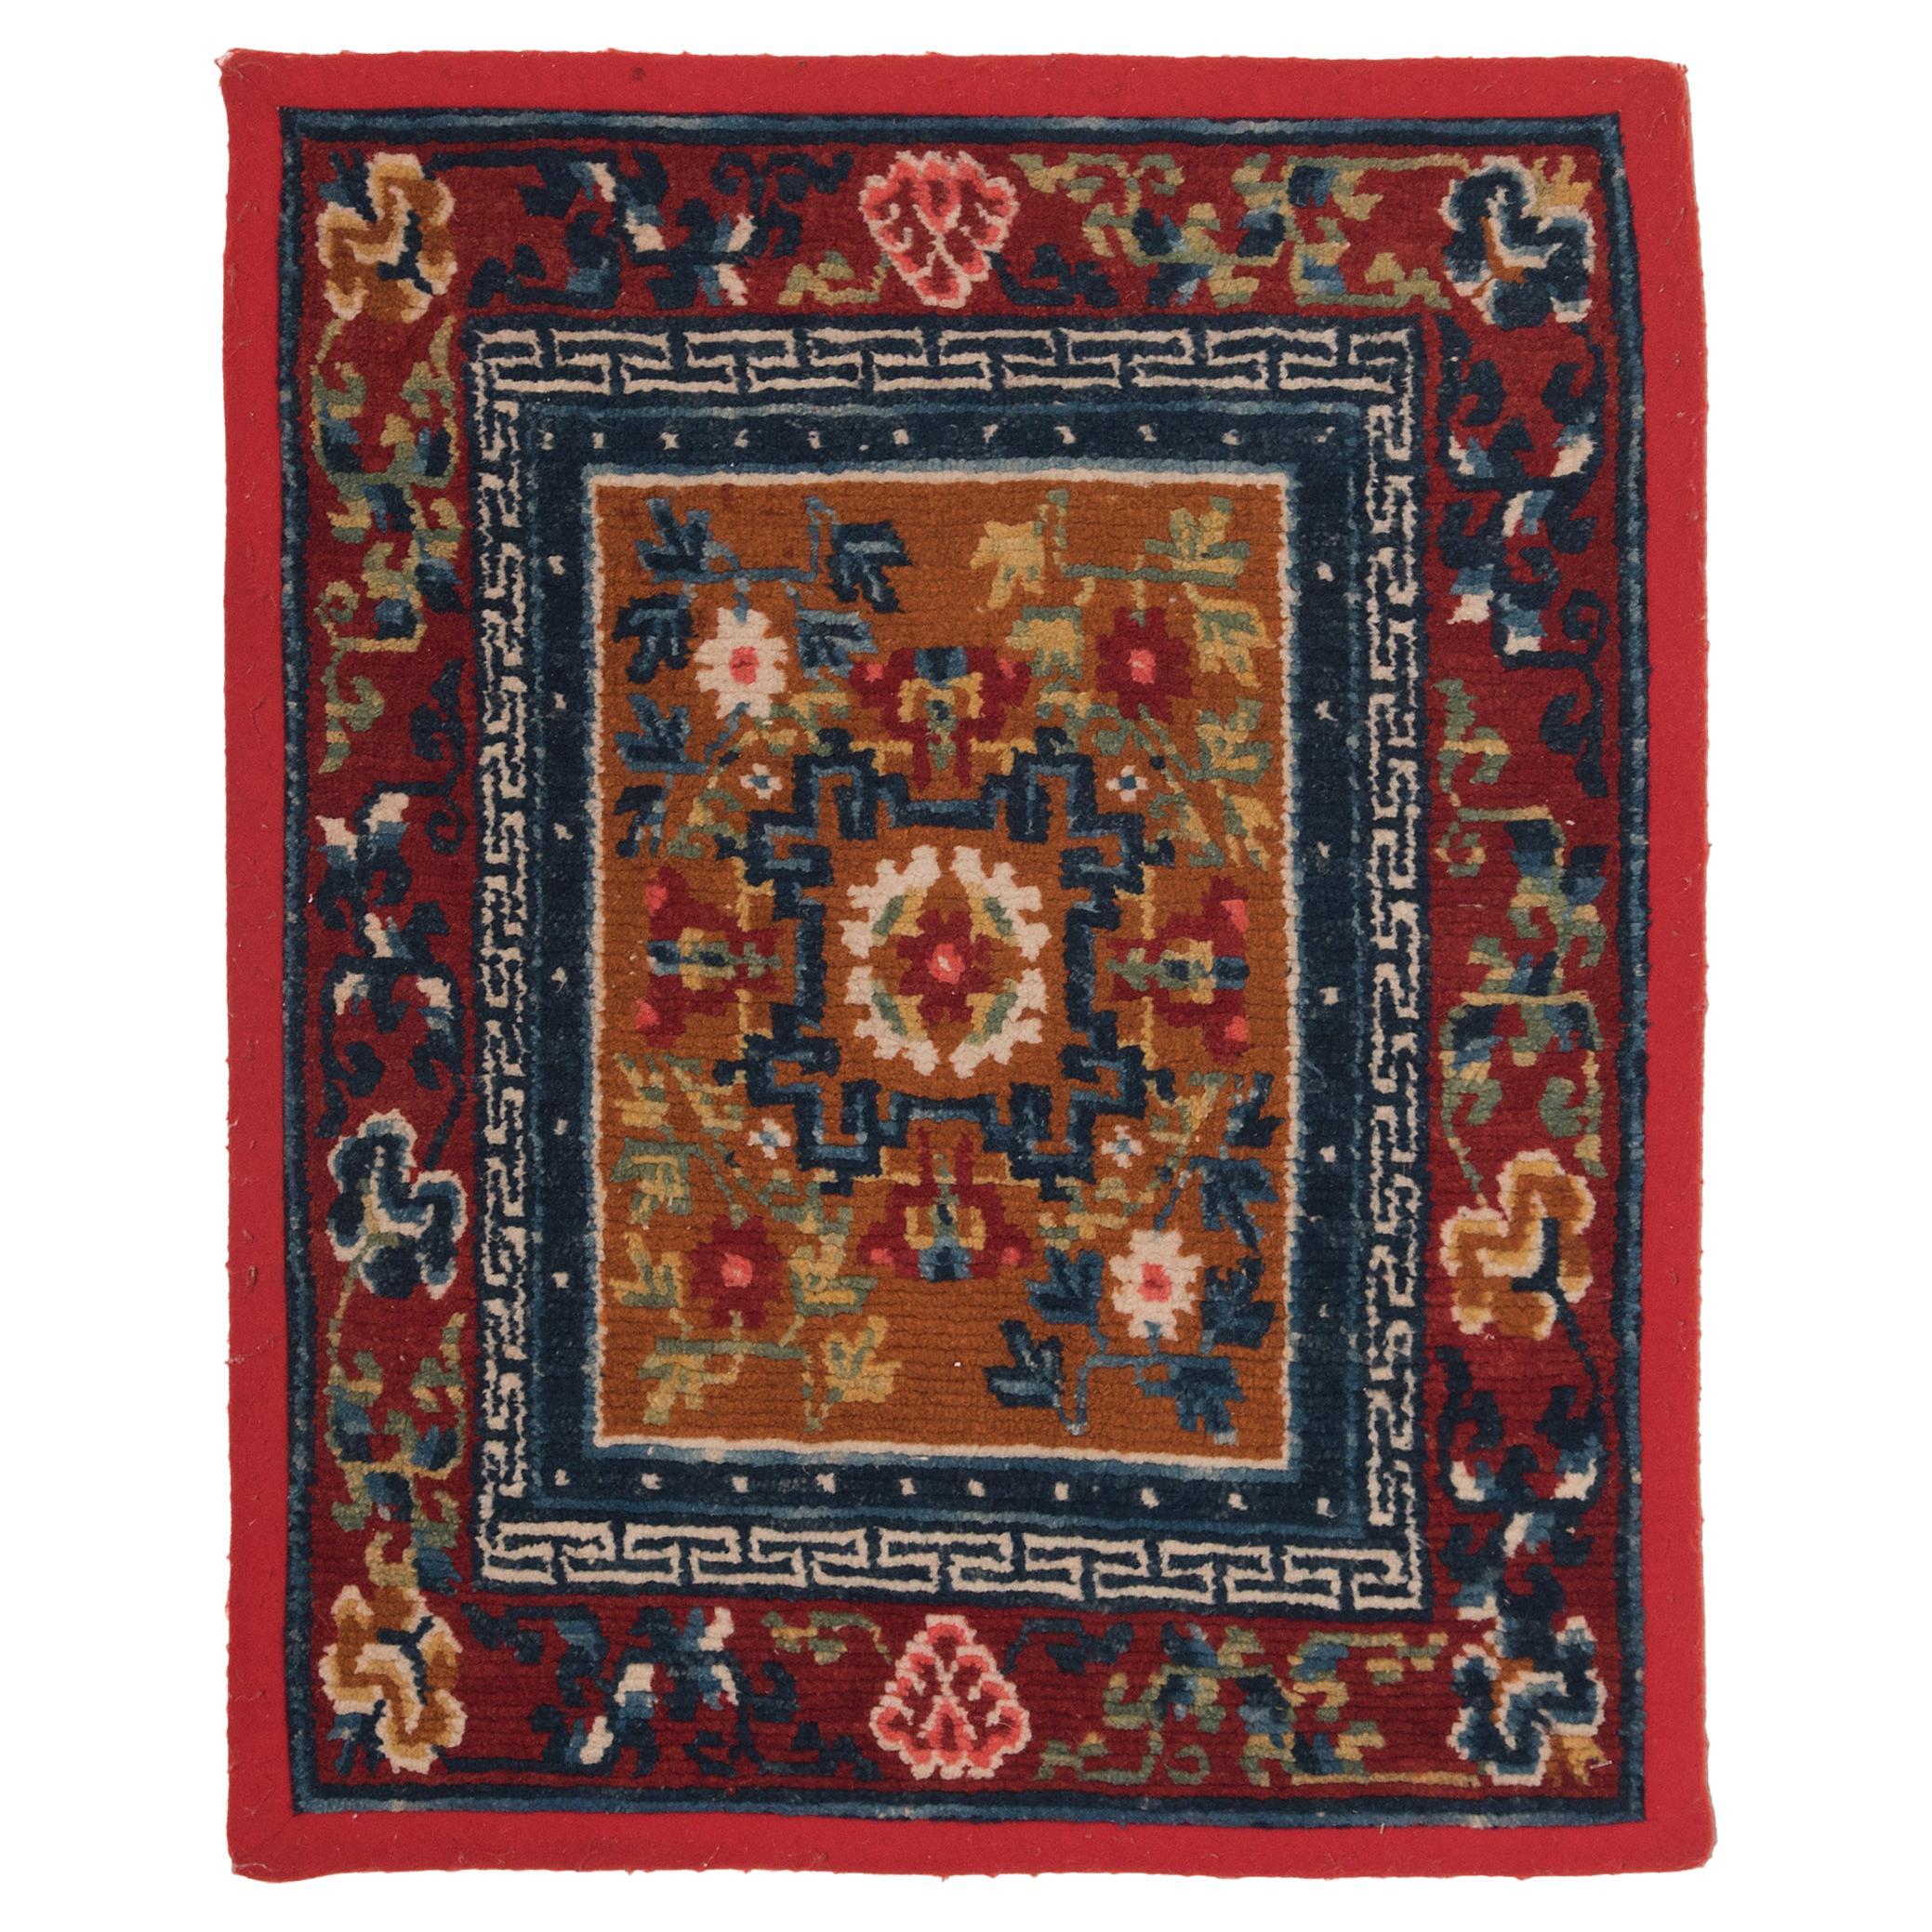 Tibetan Saddle Carpet with Floral Medallion, c. 1900